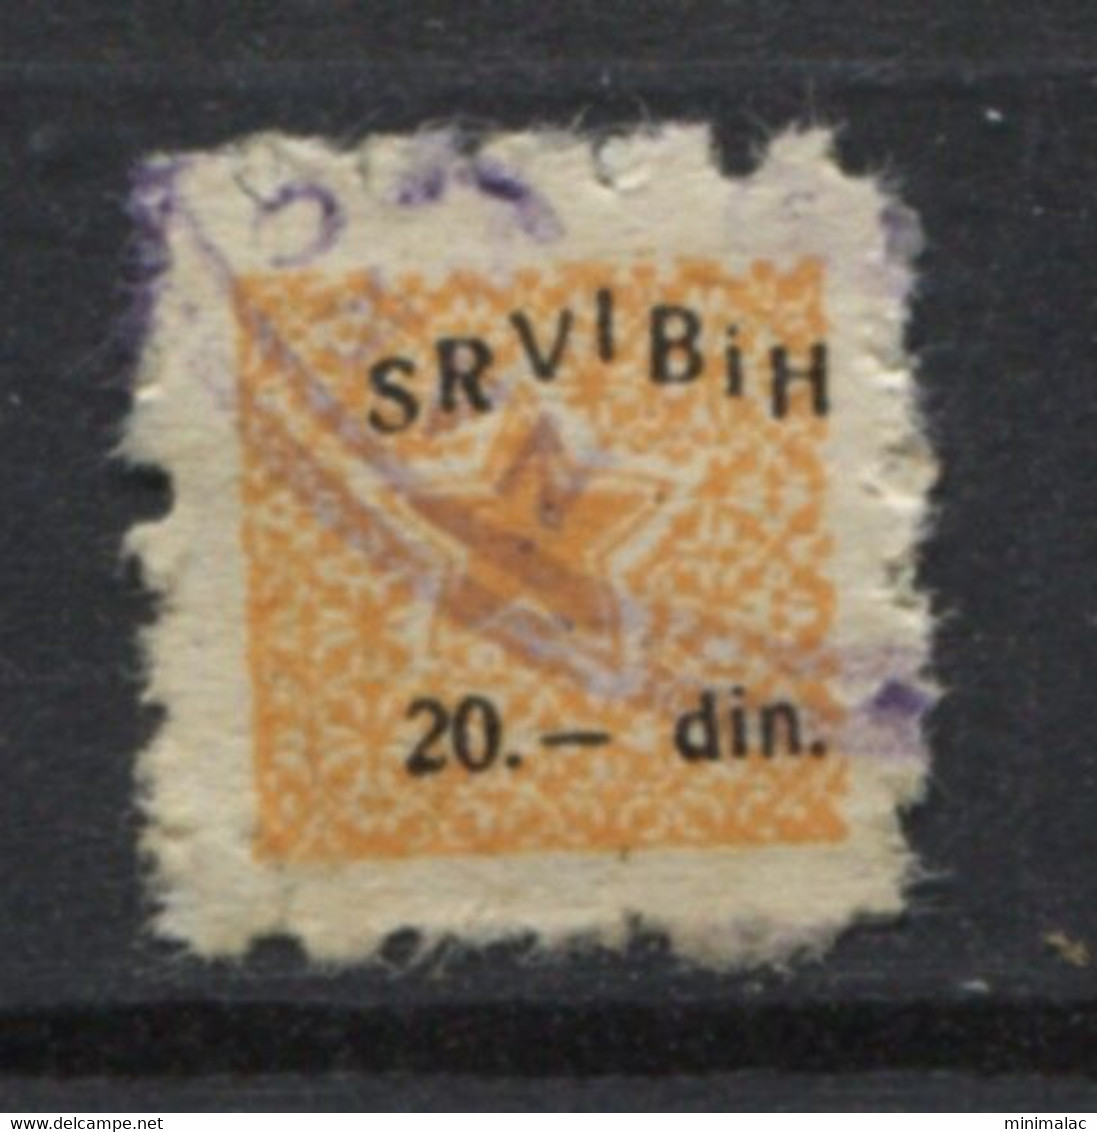 Yugoslavia 1958, Stamp For Membership, SRVIBiH, Labor Union, Administrative Stamp - Revenue, Tax Stamp, 20d    Used - Dienstzegels